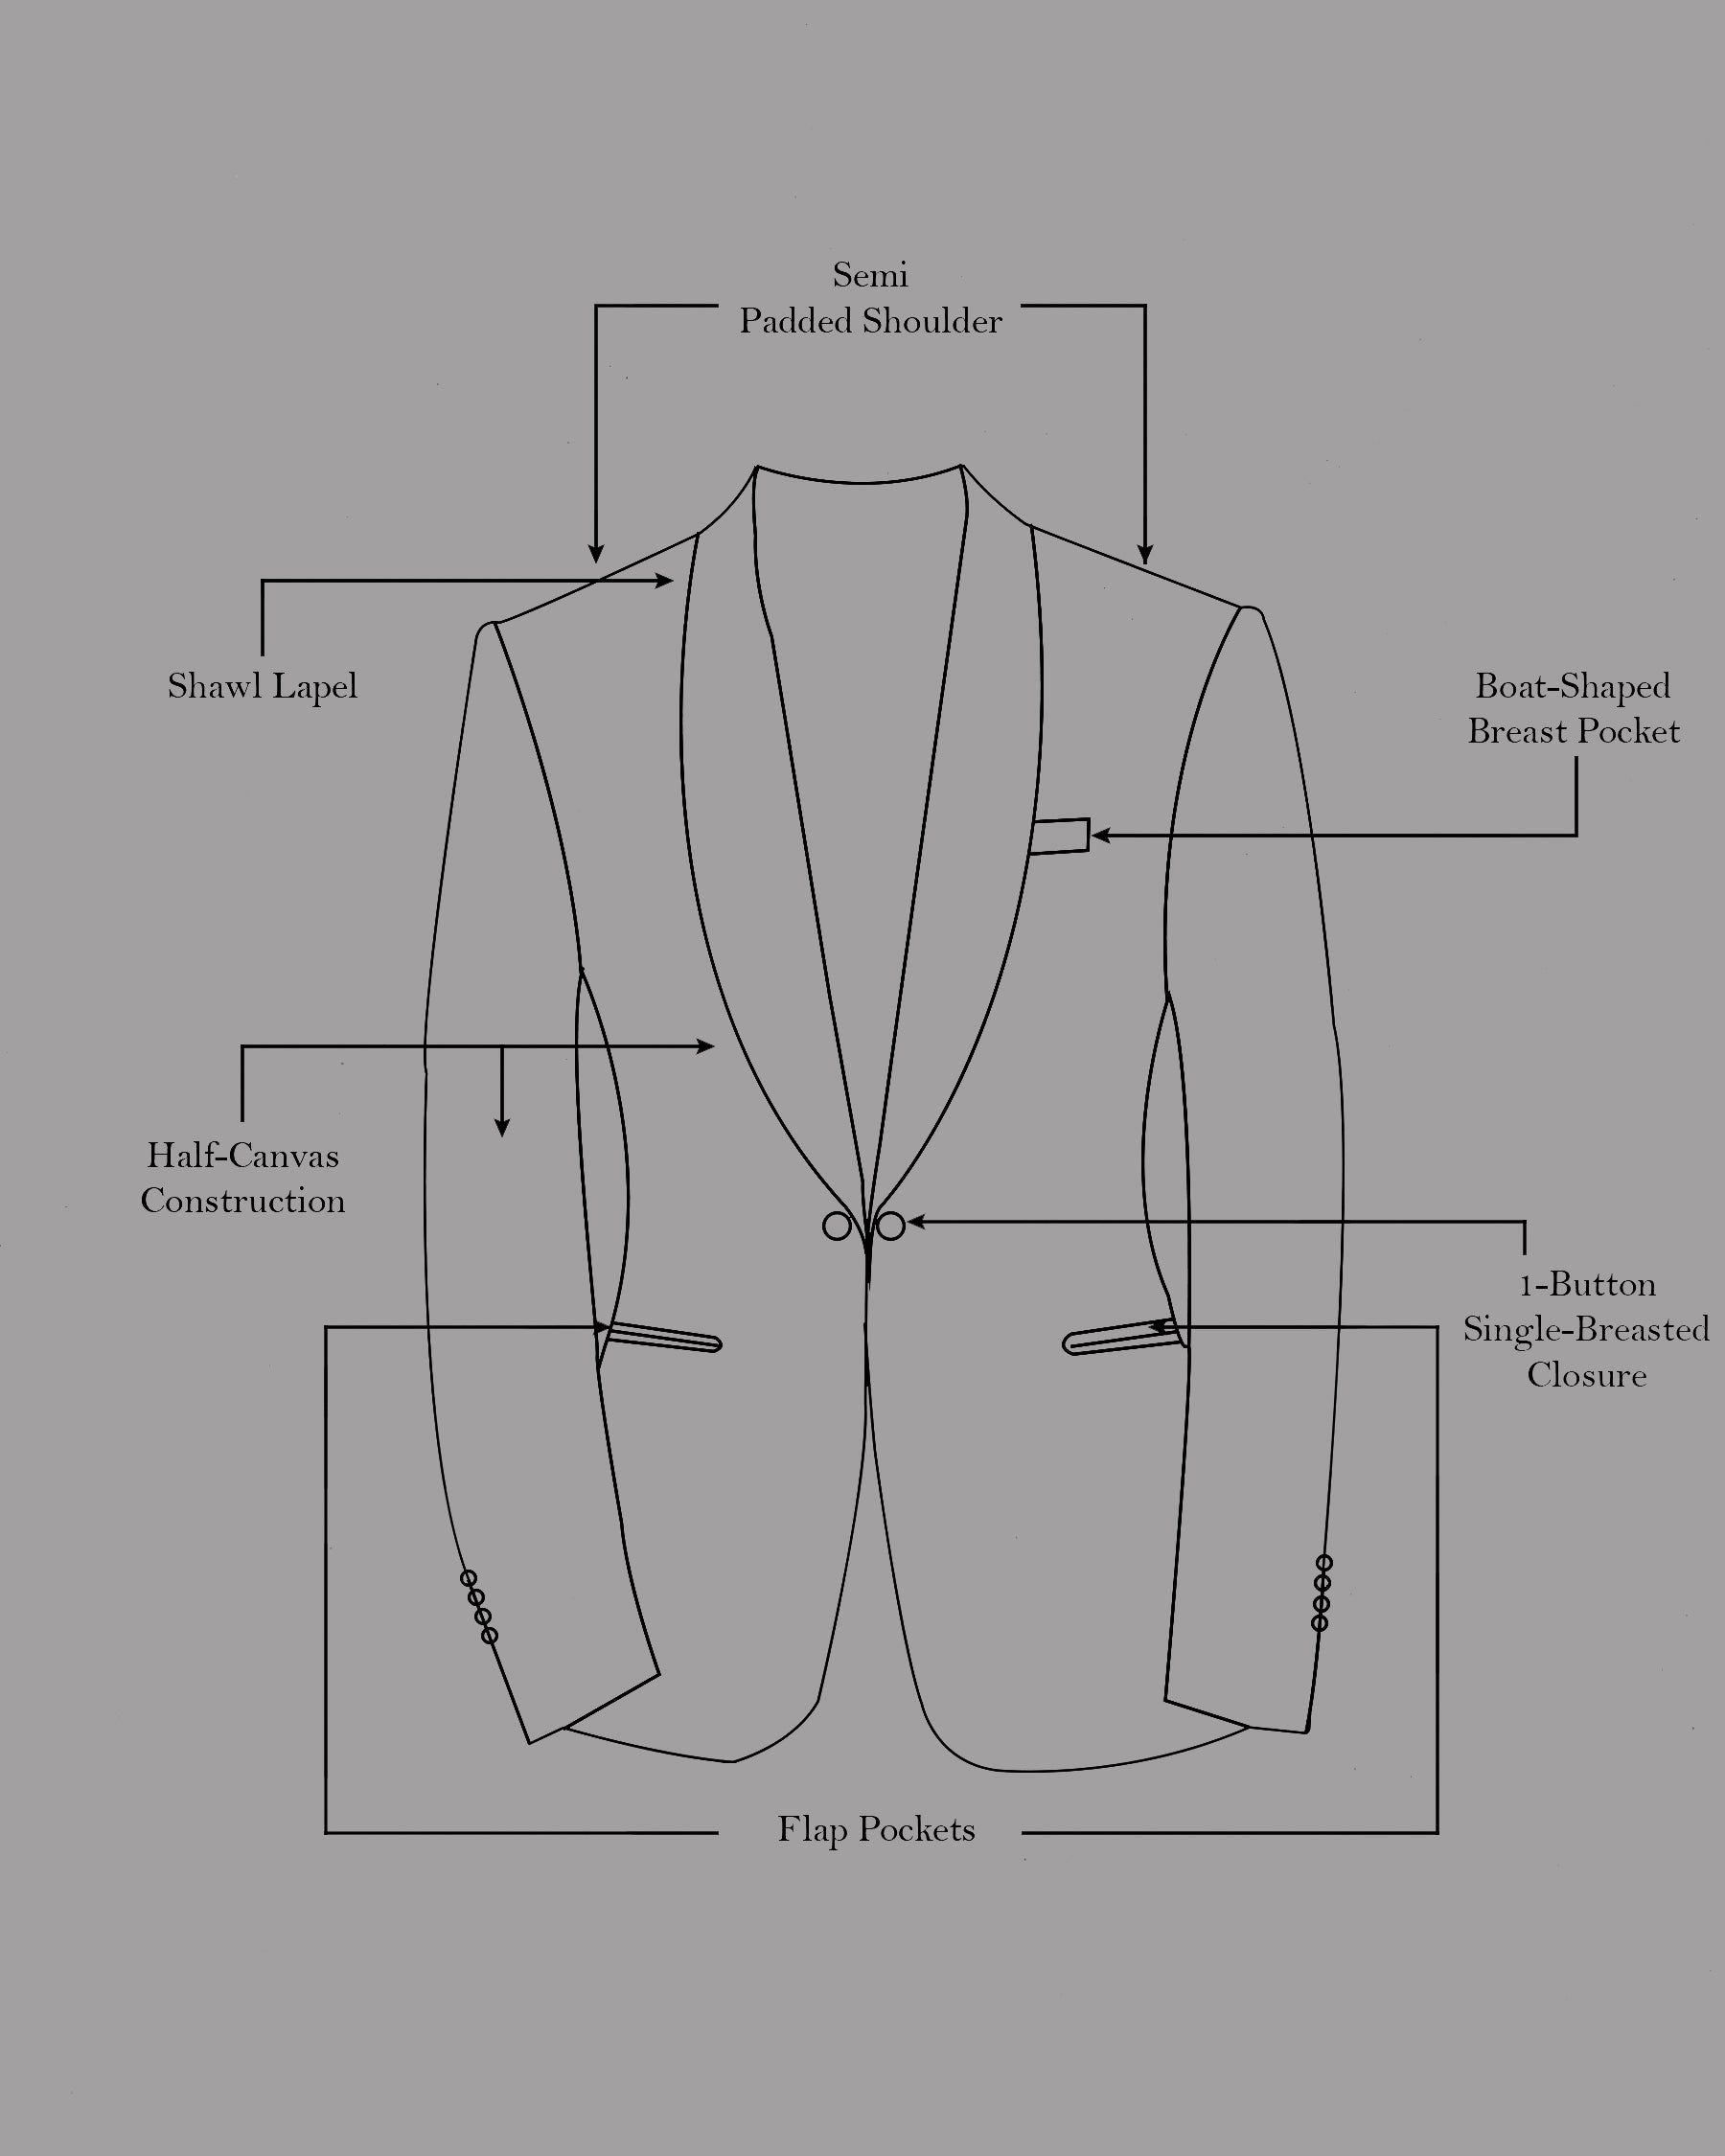 Twilight Premium Cotton Double Breasted Suit